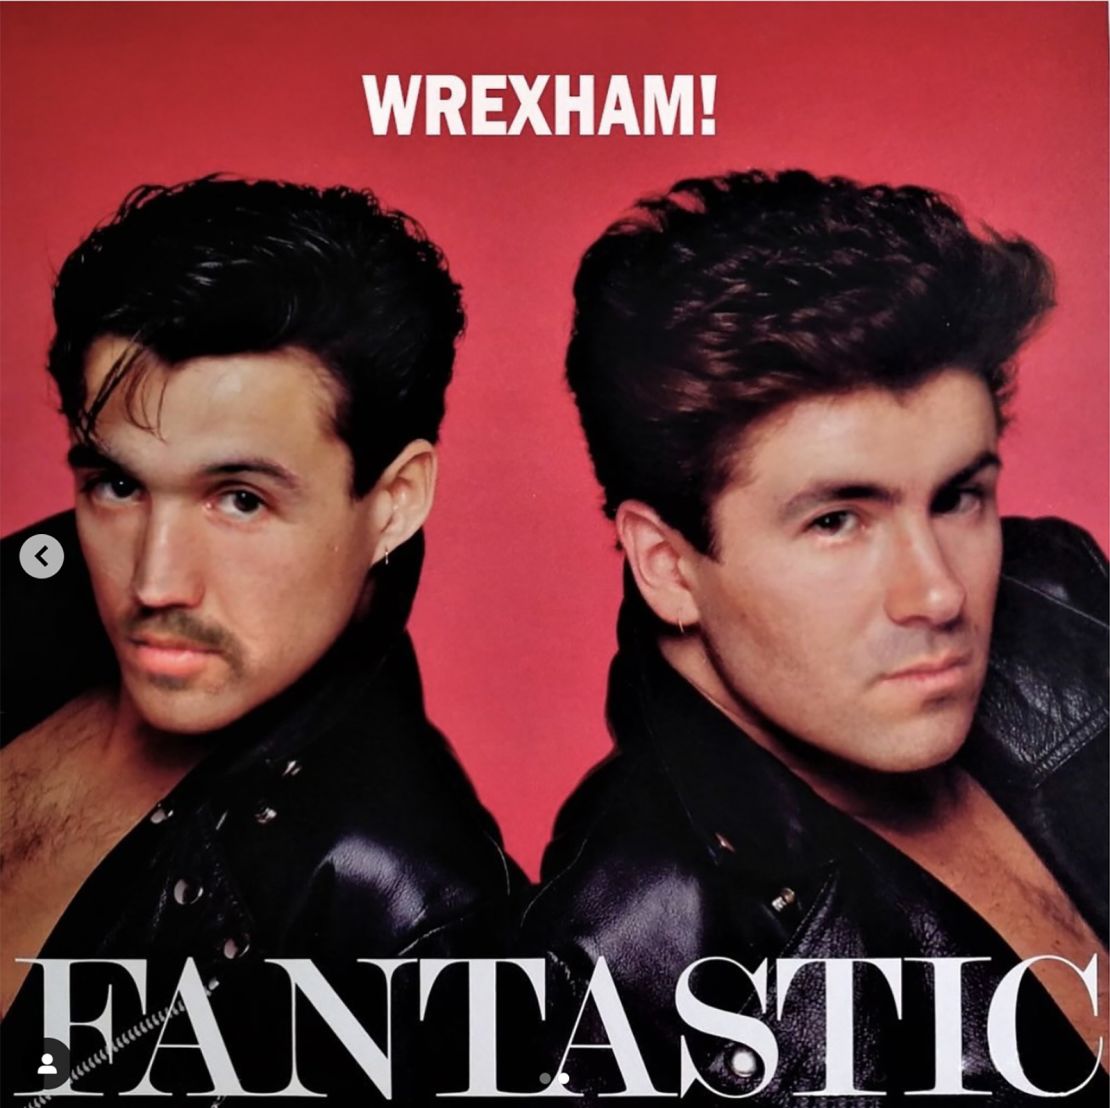 The pair also recreated the "Fantastic" album cover.